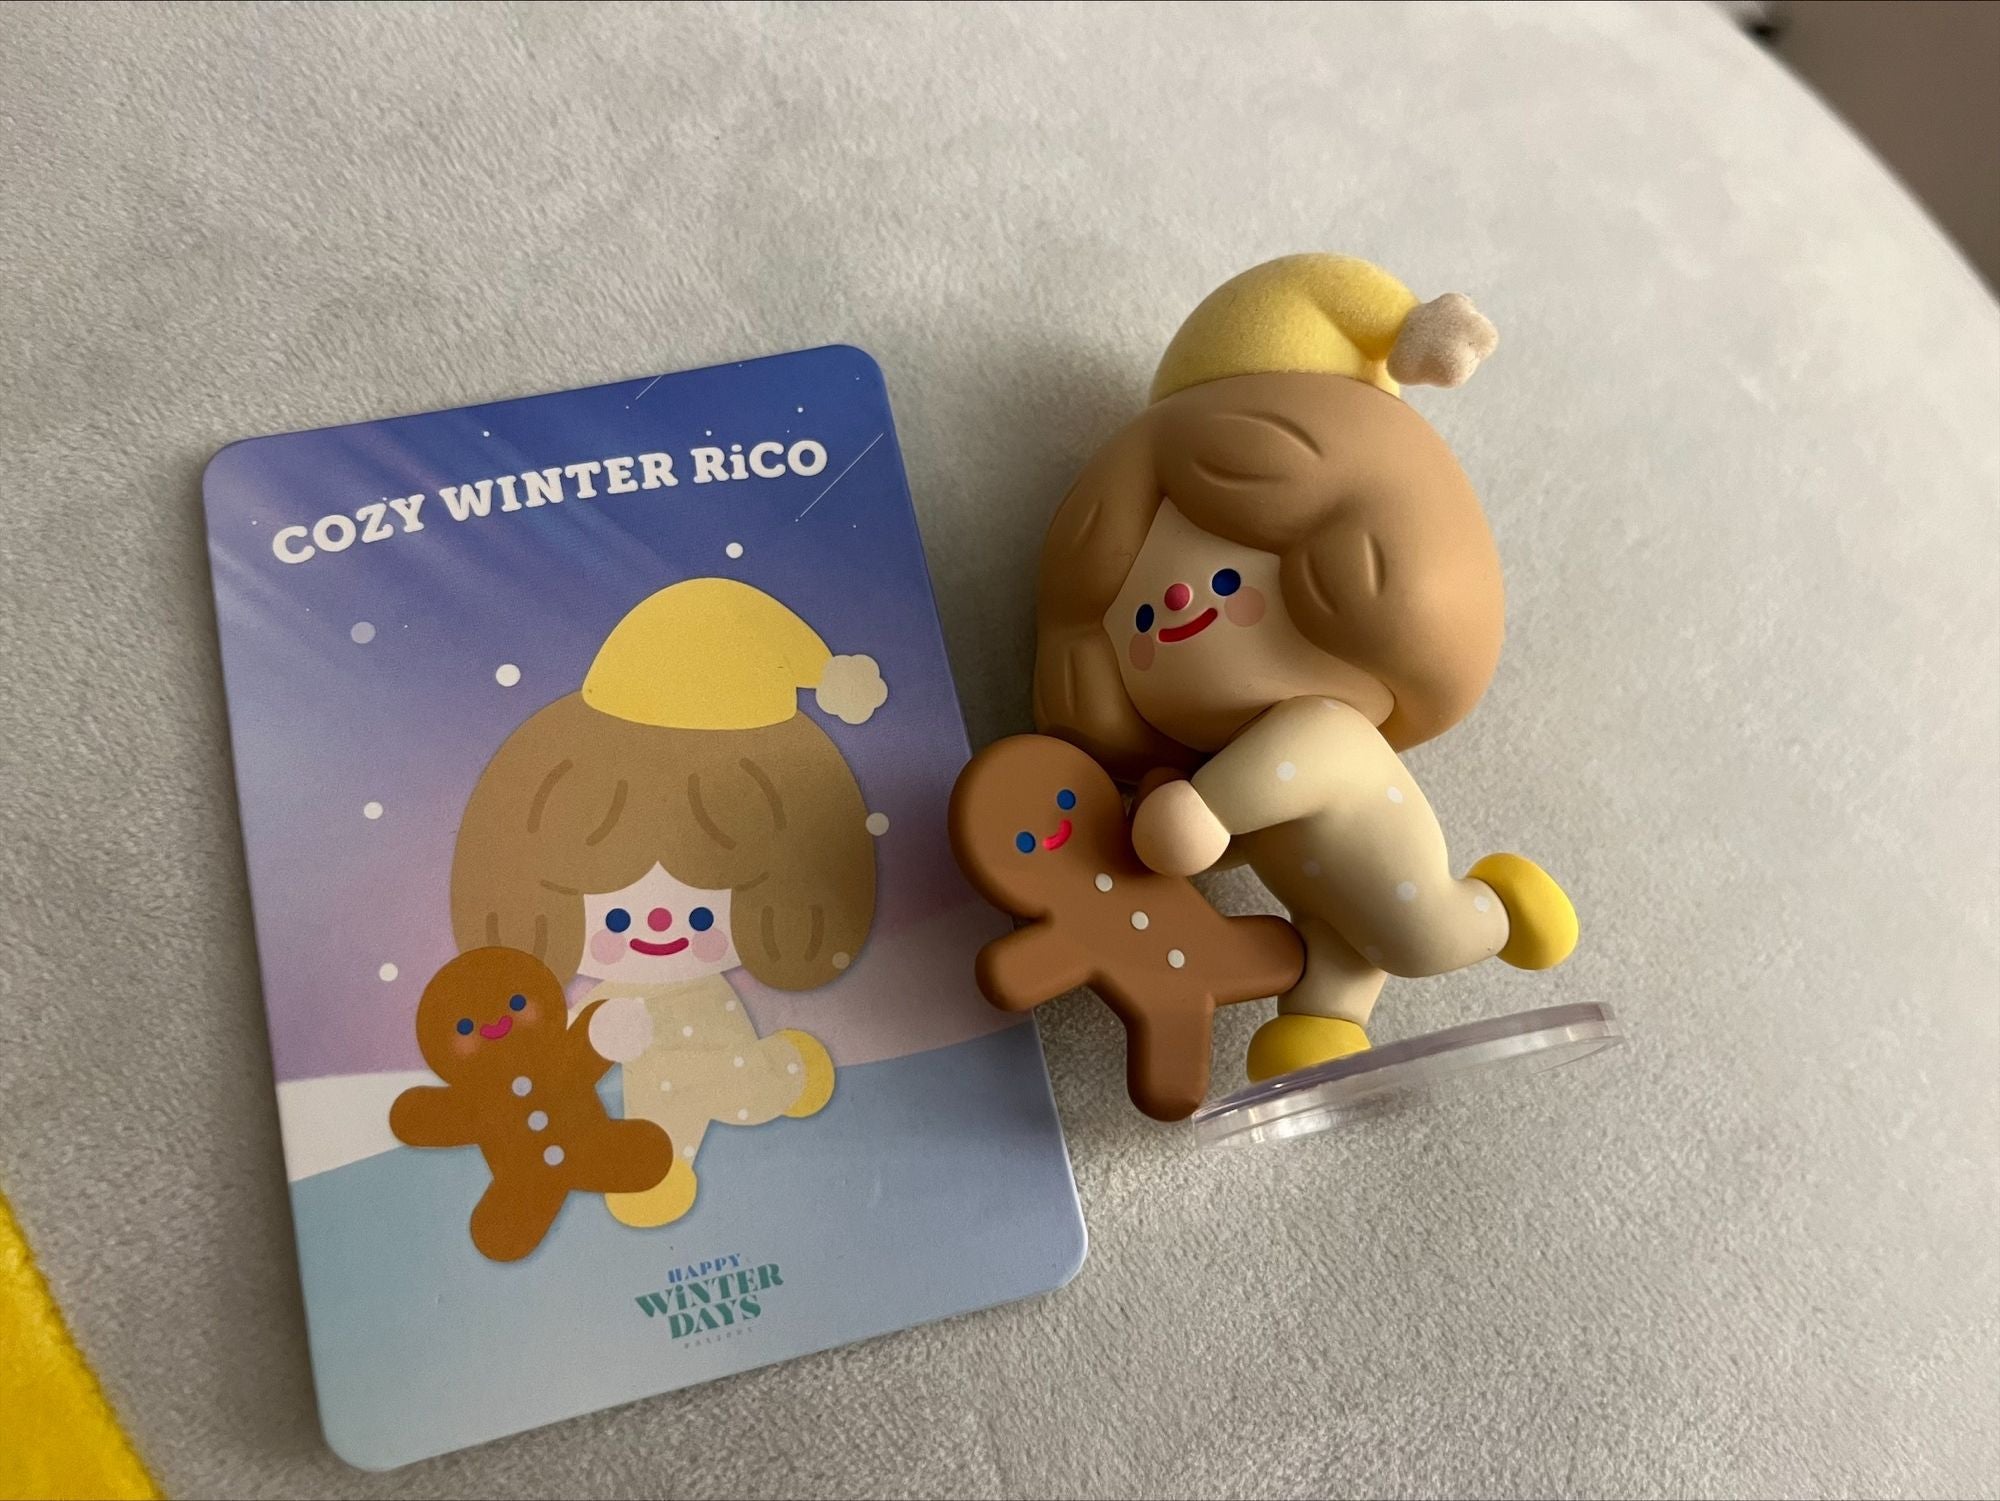 Cozy Winter Rico - RiCO Happy Winter Days Blind Box Series by Rico x Finding Unicorn - 1